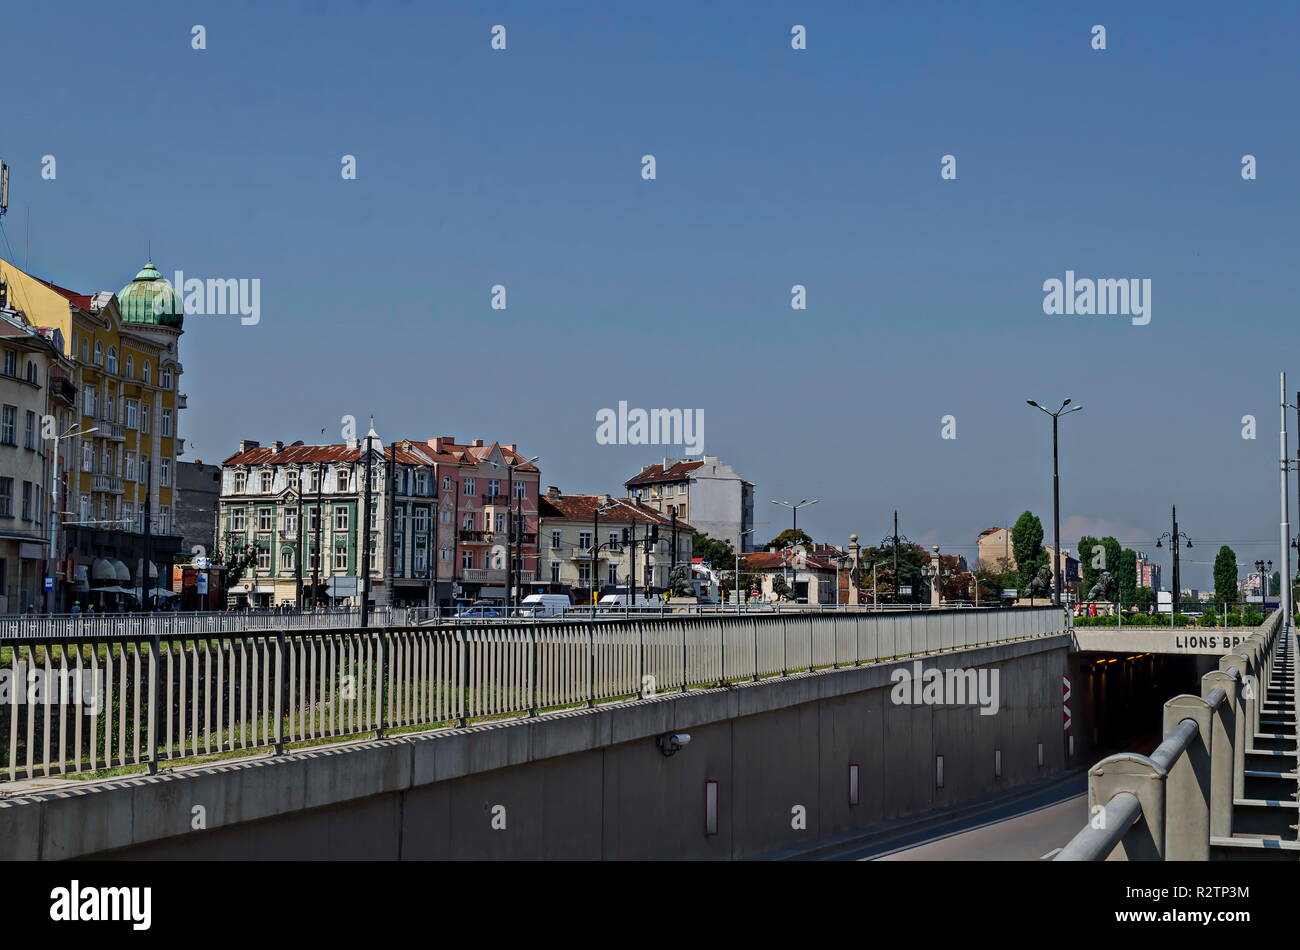 Cityscape of bulgarian capital city Sofia near by Lions bridge, Sofia, Bulgaria, Europe Stock Photo